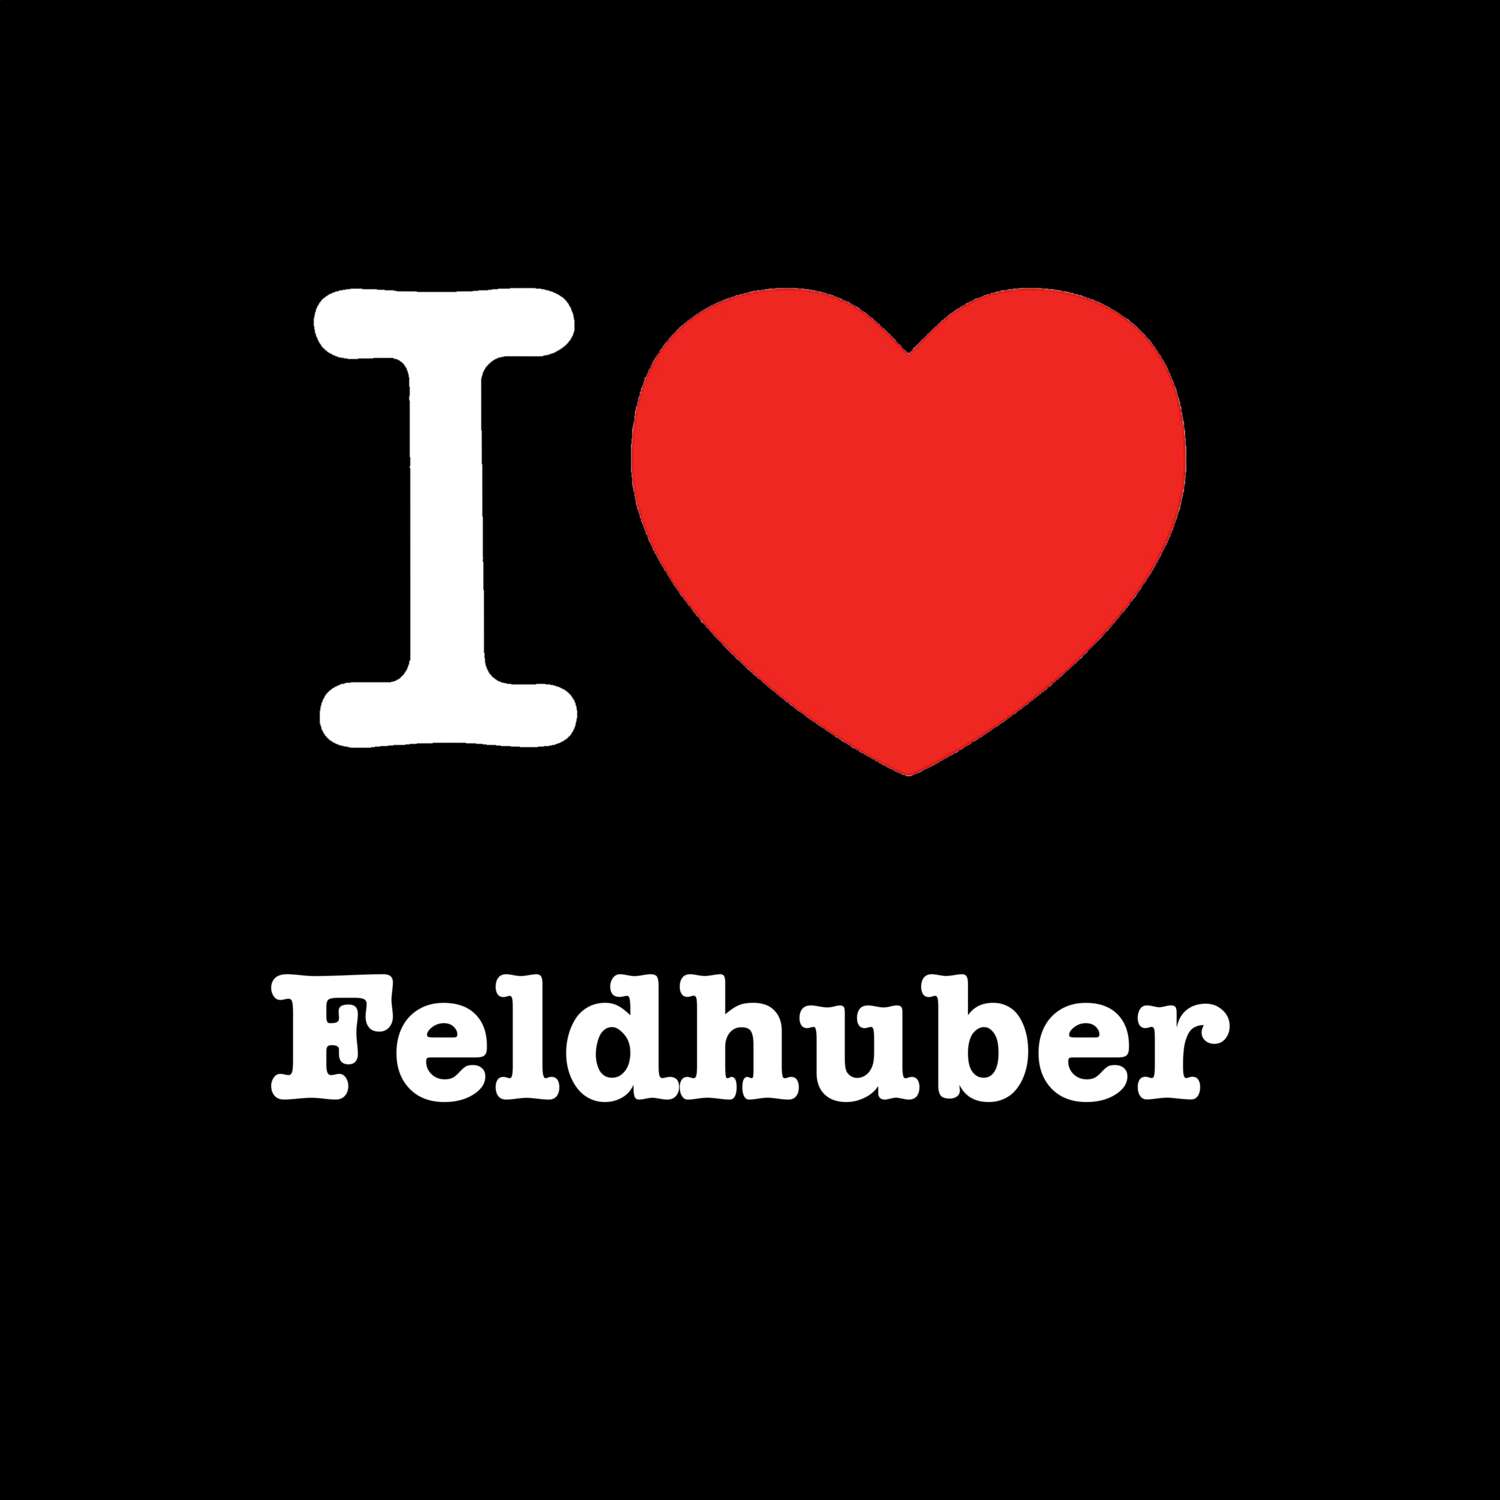 Feldhuber T-Shirt »I love«